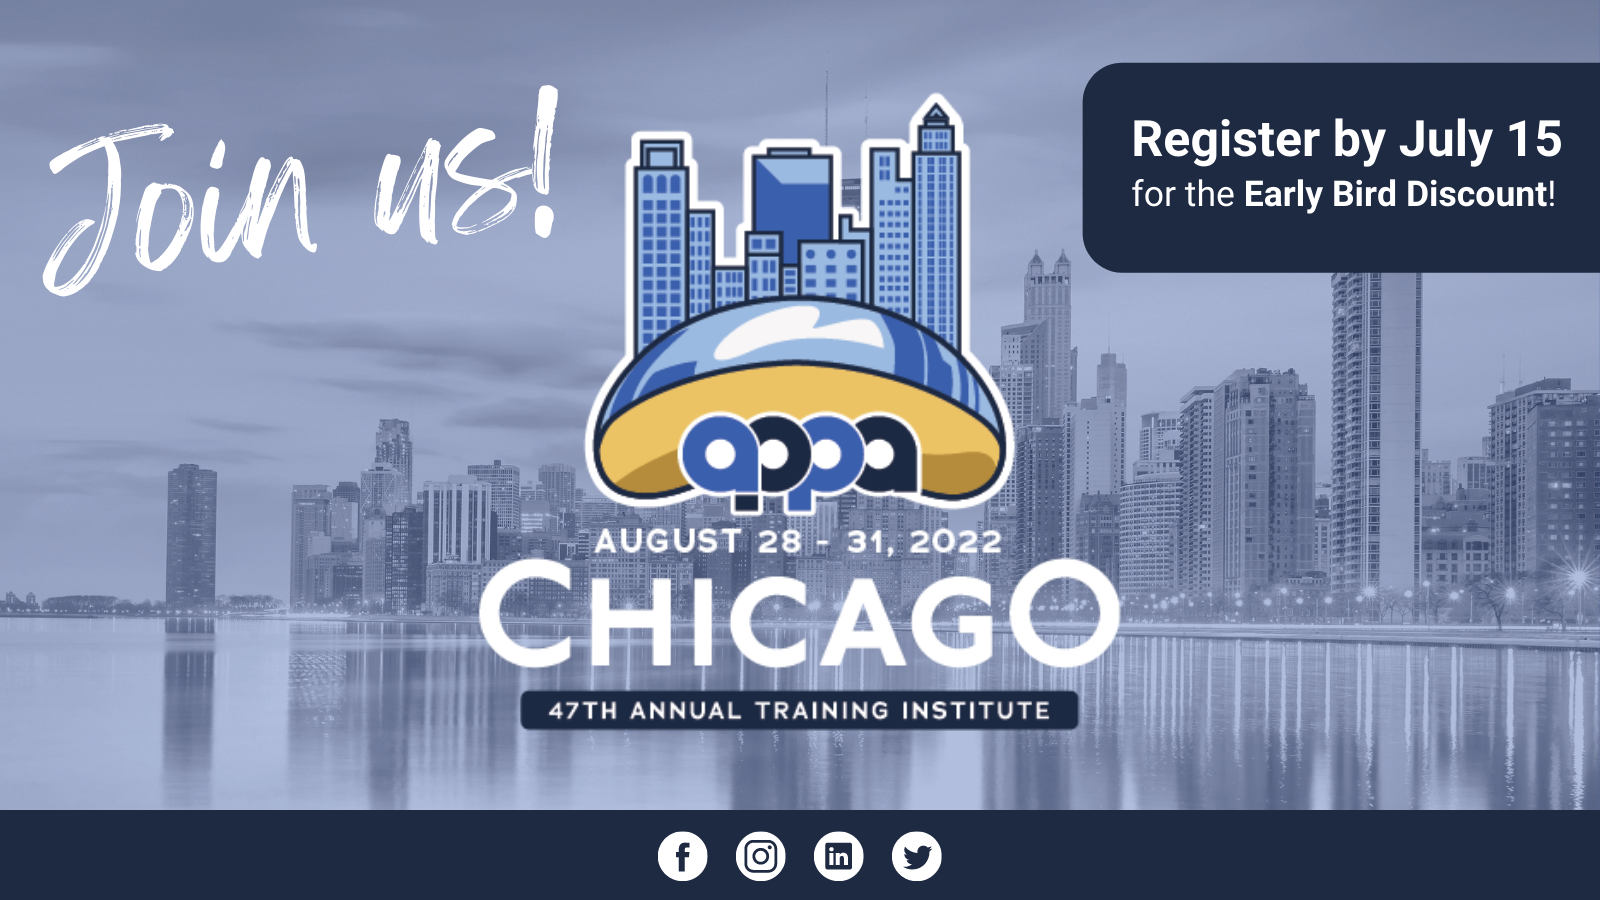 Chicago Training Institute 2022 Twitter Post